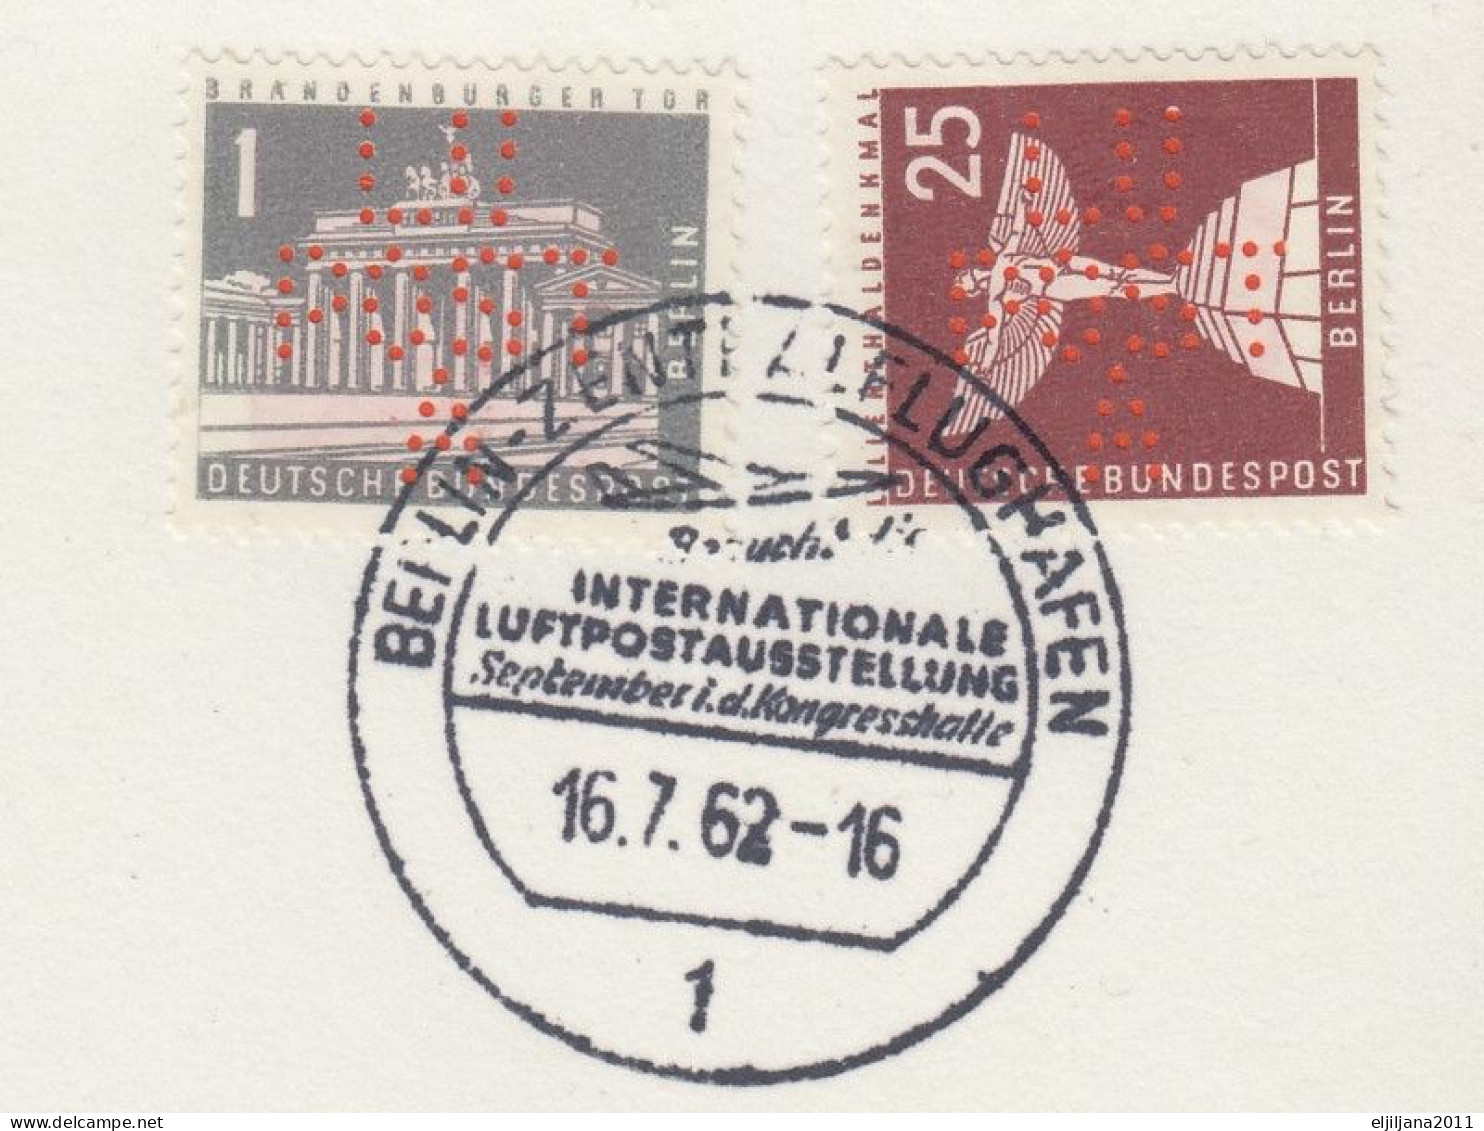 Action !! SALE !! 50 % OFF !! ⁕ Germany BERLIN 1962 ⁕ LUPOSTA Exhibition Airmail Mi.140, 145, 147 ⁕ 2v Postcard - Poste Aérienne